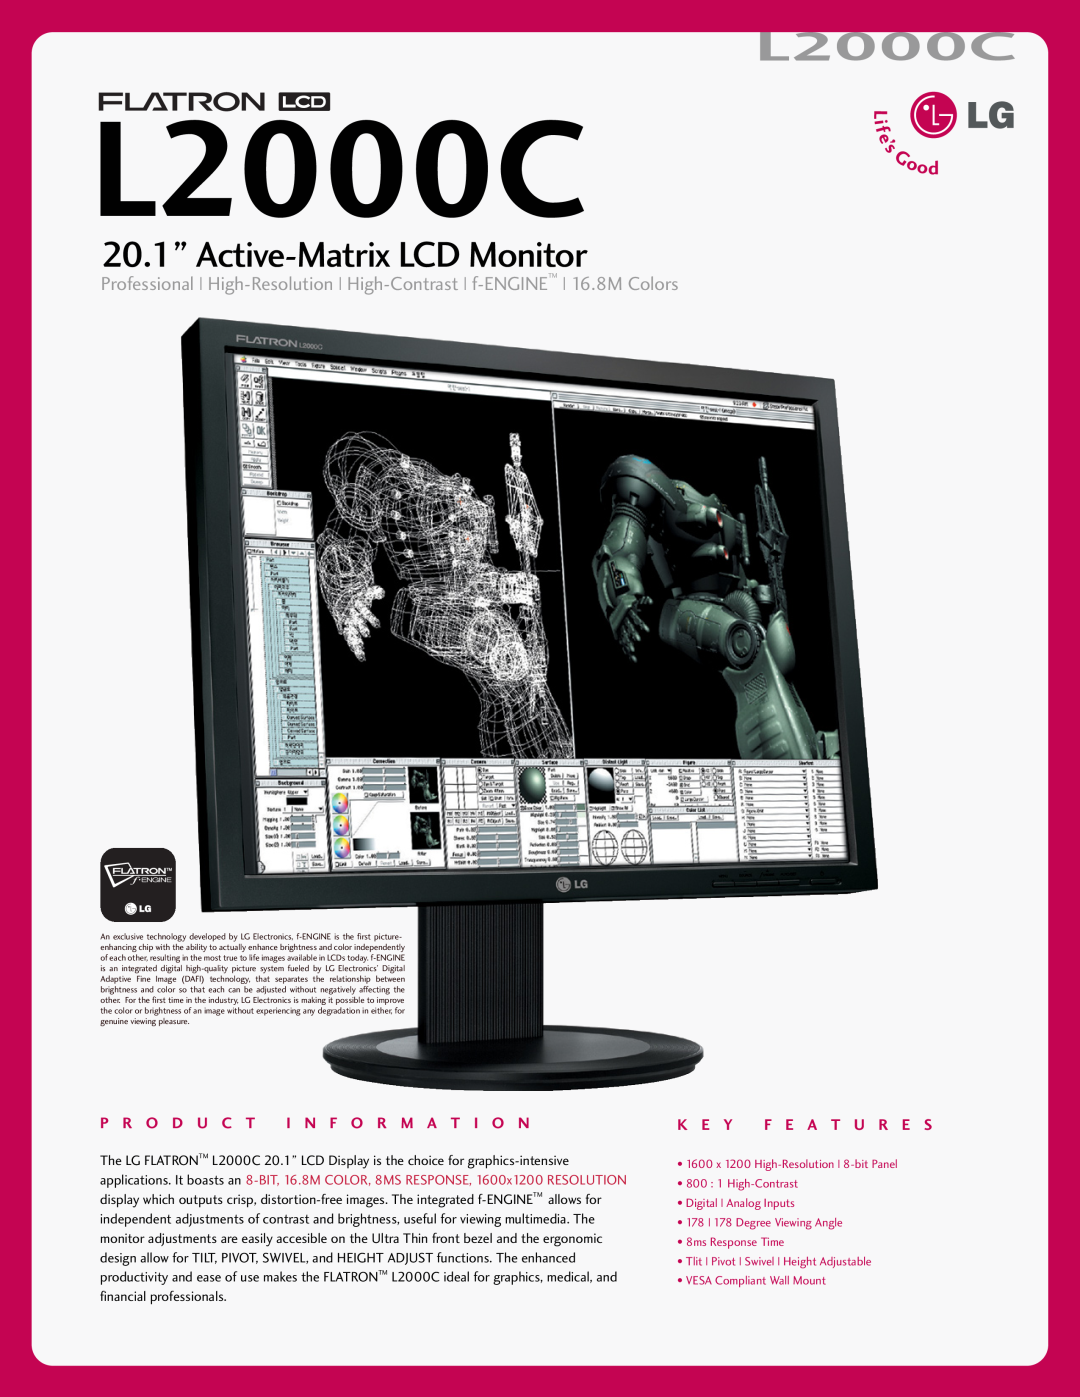 LG Electronics L2000C manual 20.1” Active-Matrix LCD Monitor, P R O D U C T I N F O R M A T I O N, K E Y F E A T U R E S 